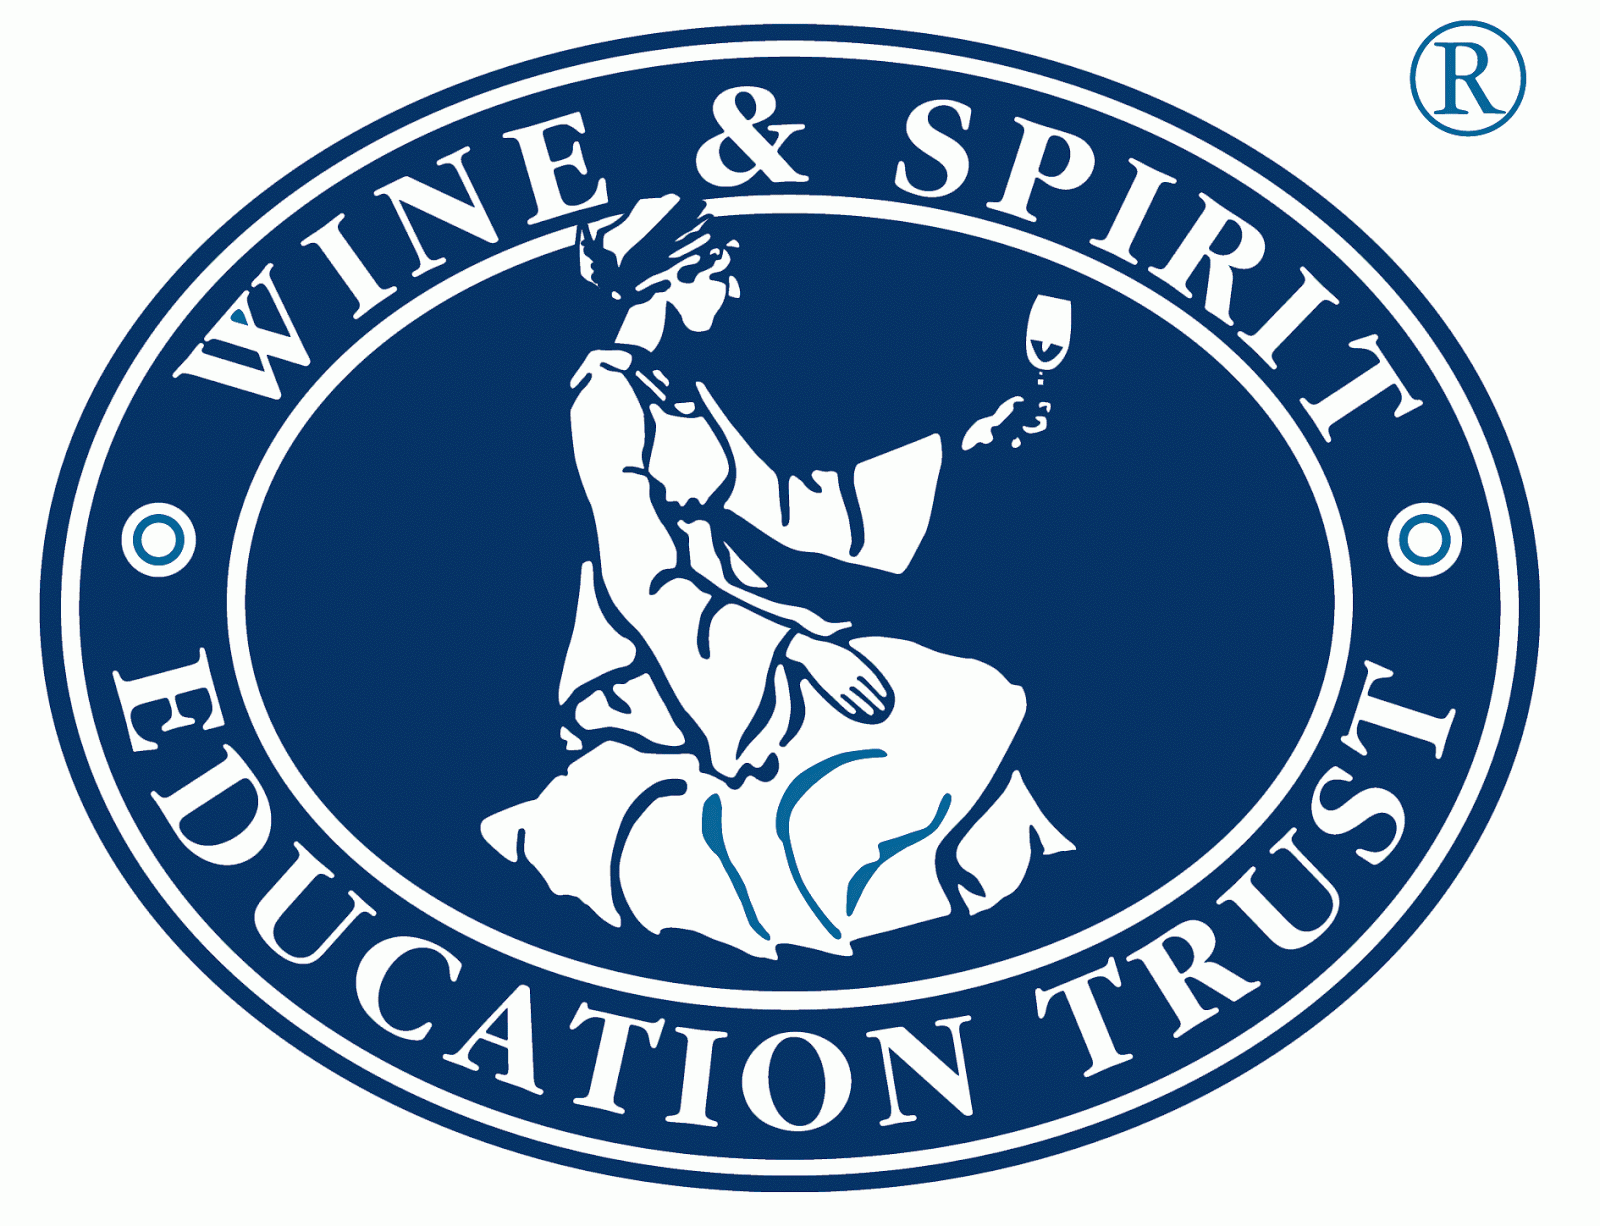 www.finevintageltd.com/wine-courses/tuscany 